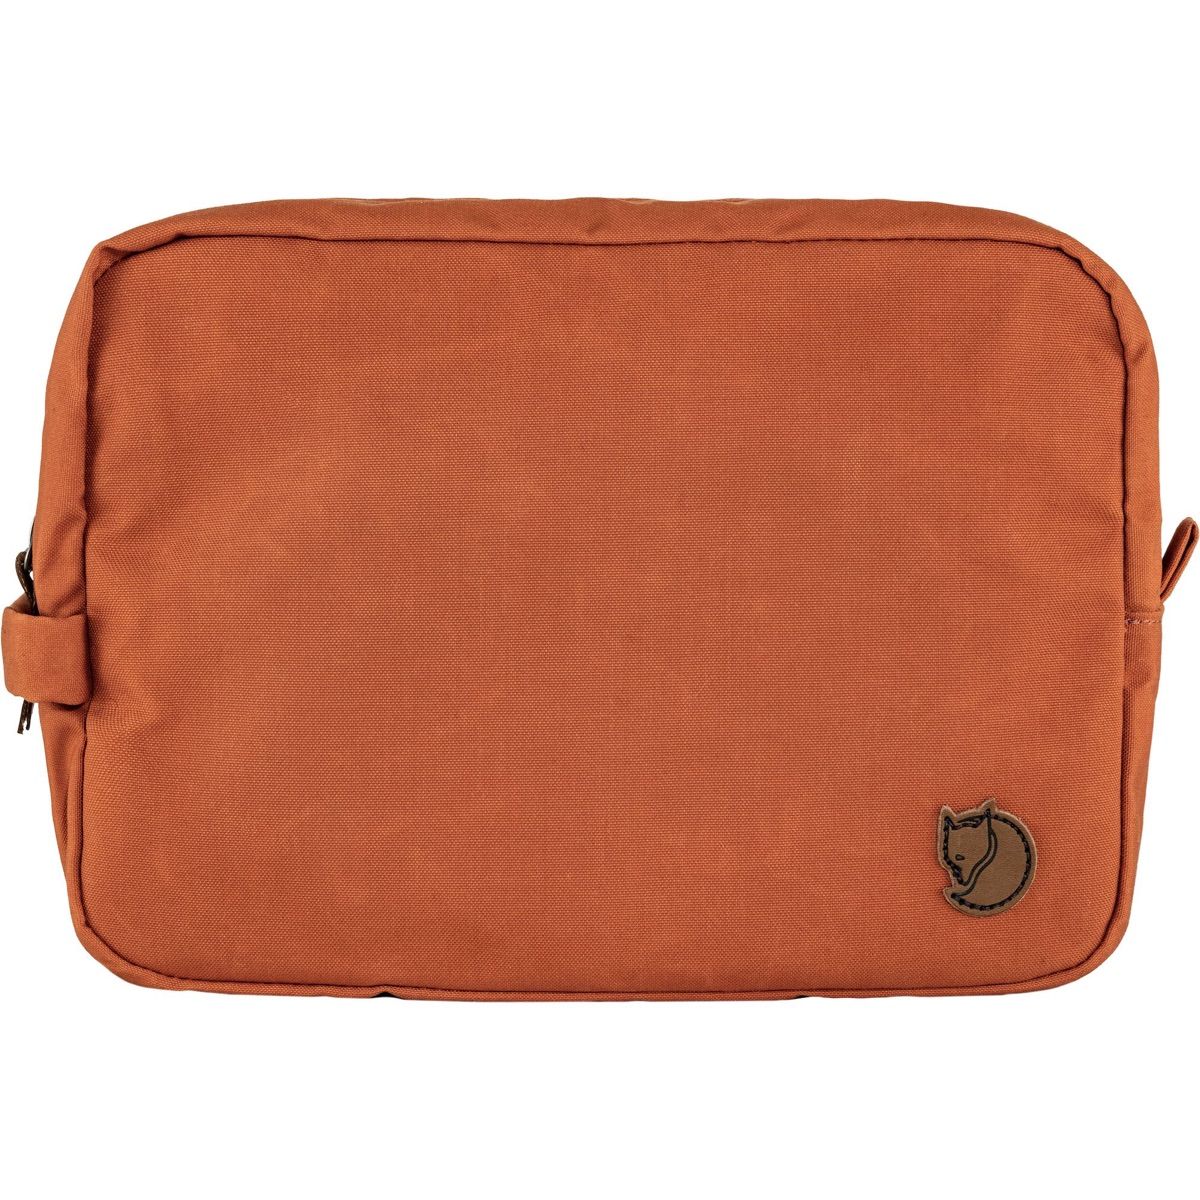 Fjällräven Gear Bag Large Terracotta Brown